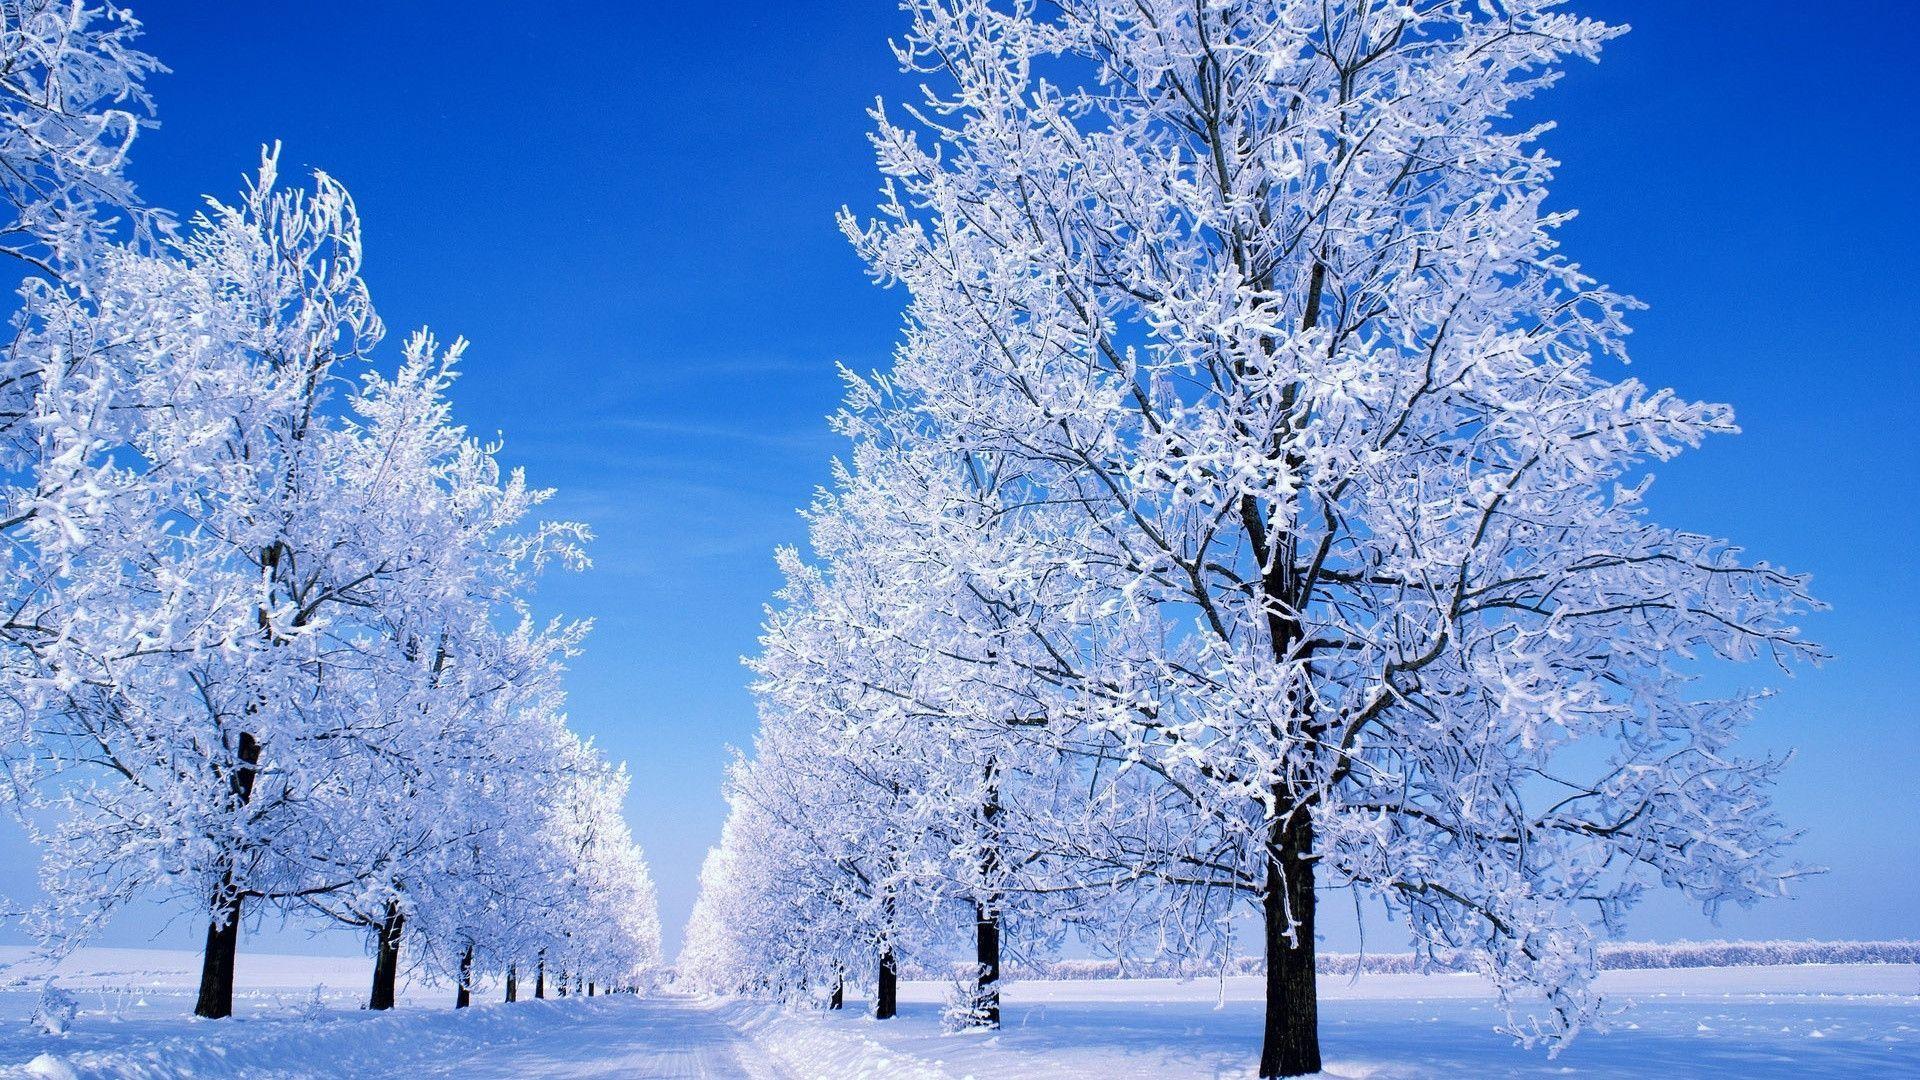 winter scene desktop wallpaper 2015